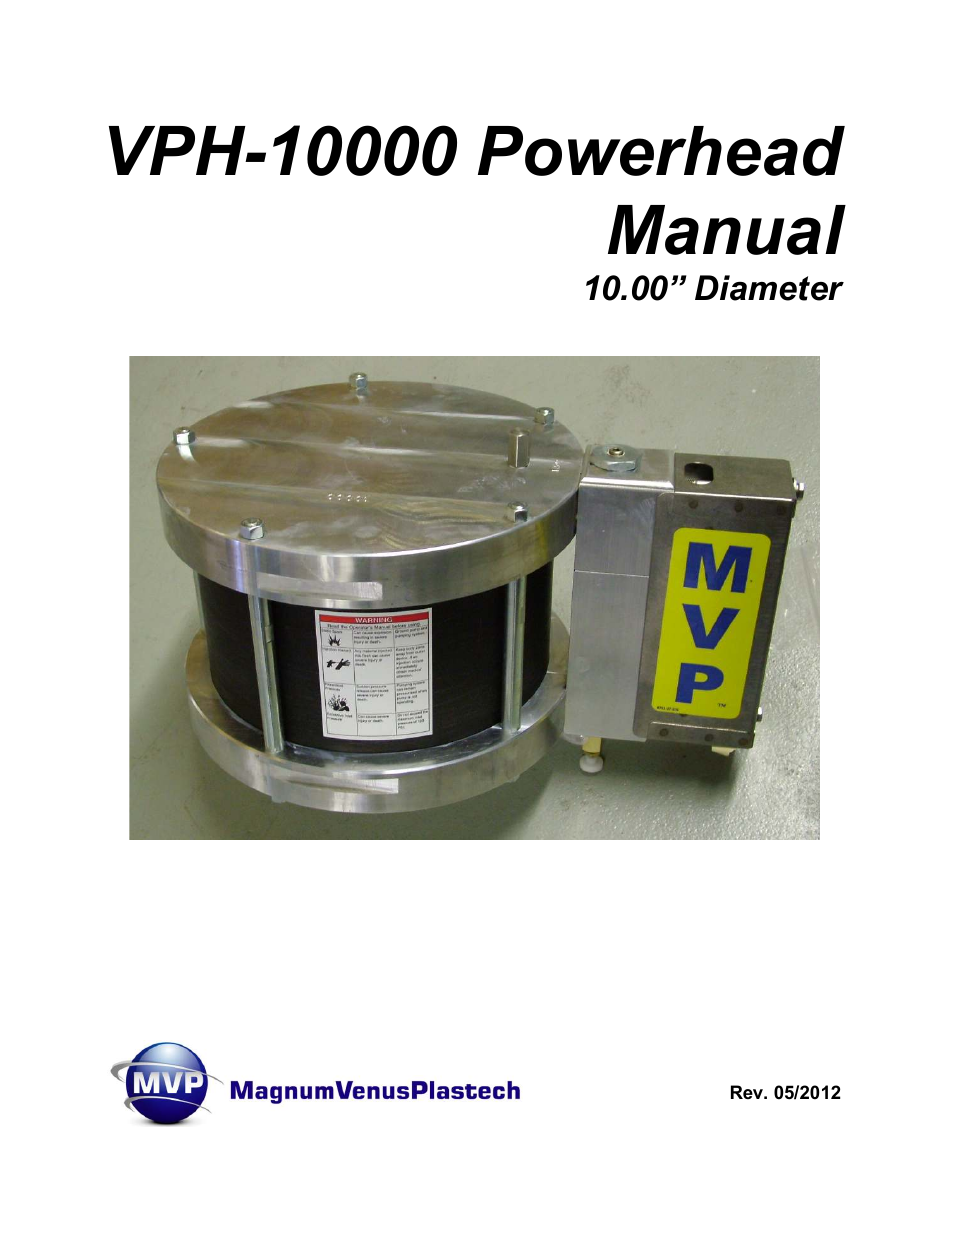 Powerhead VPH-10000